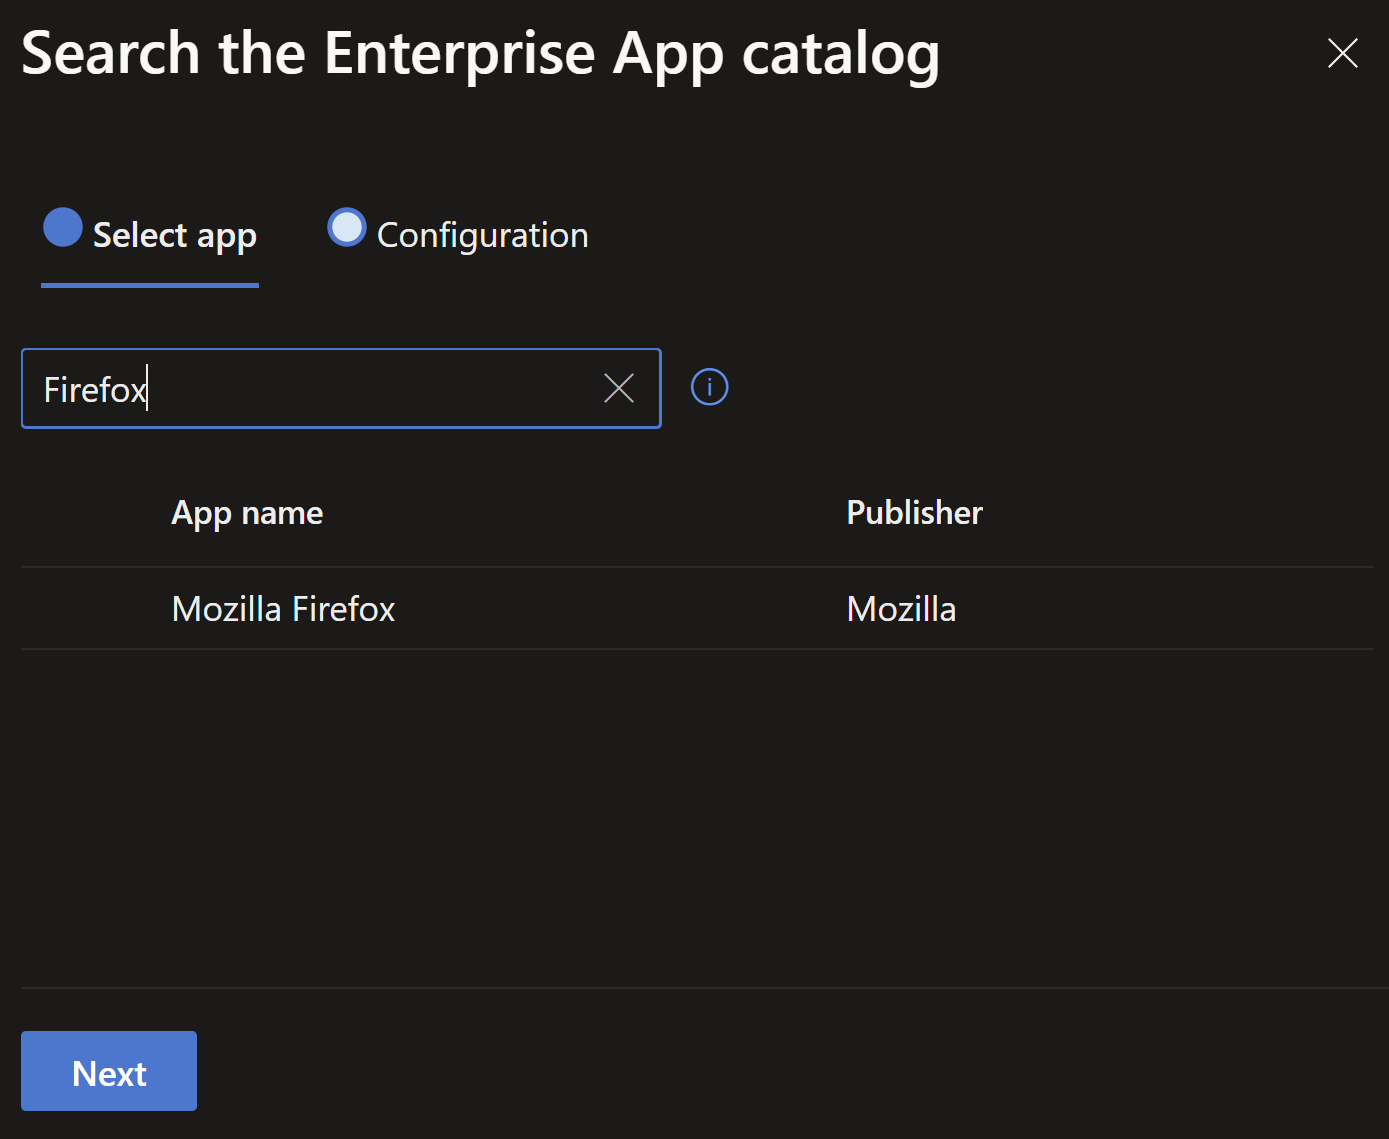 Search the Enterprise App Catalog - Select App